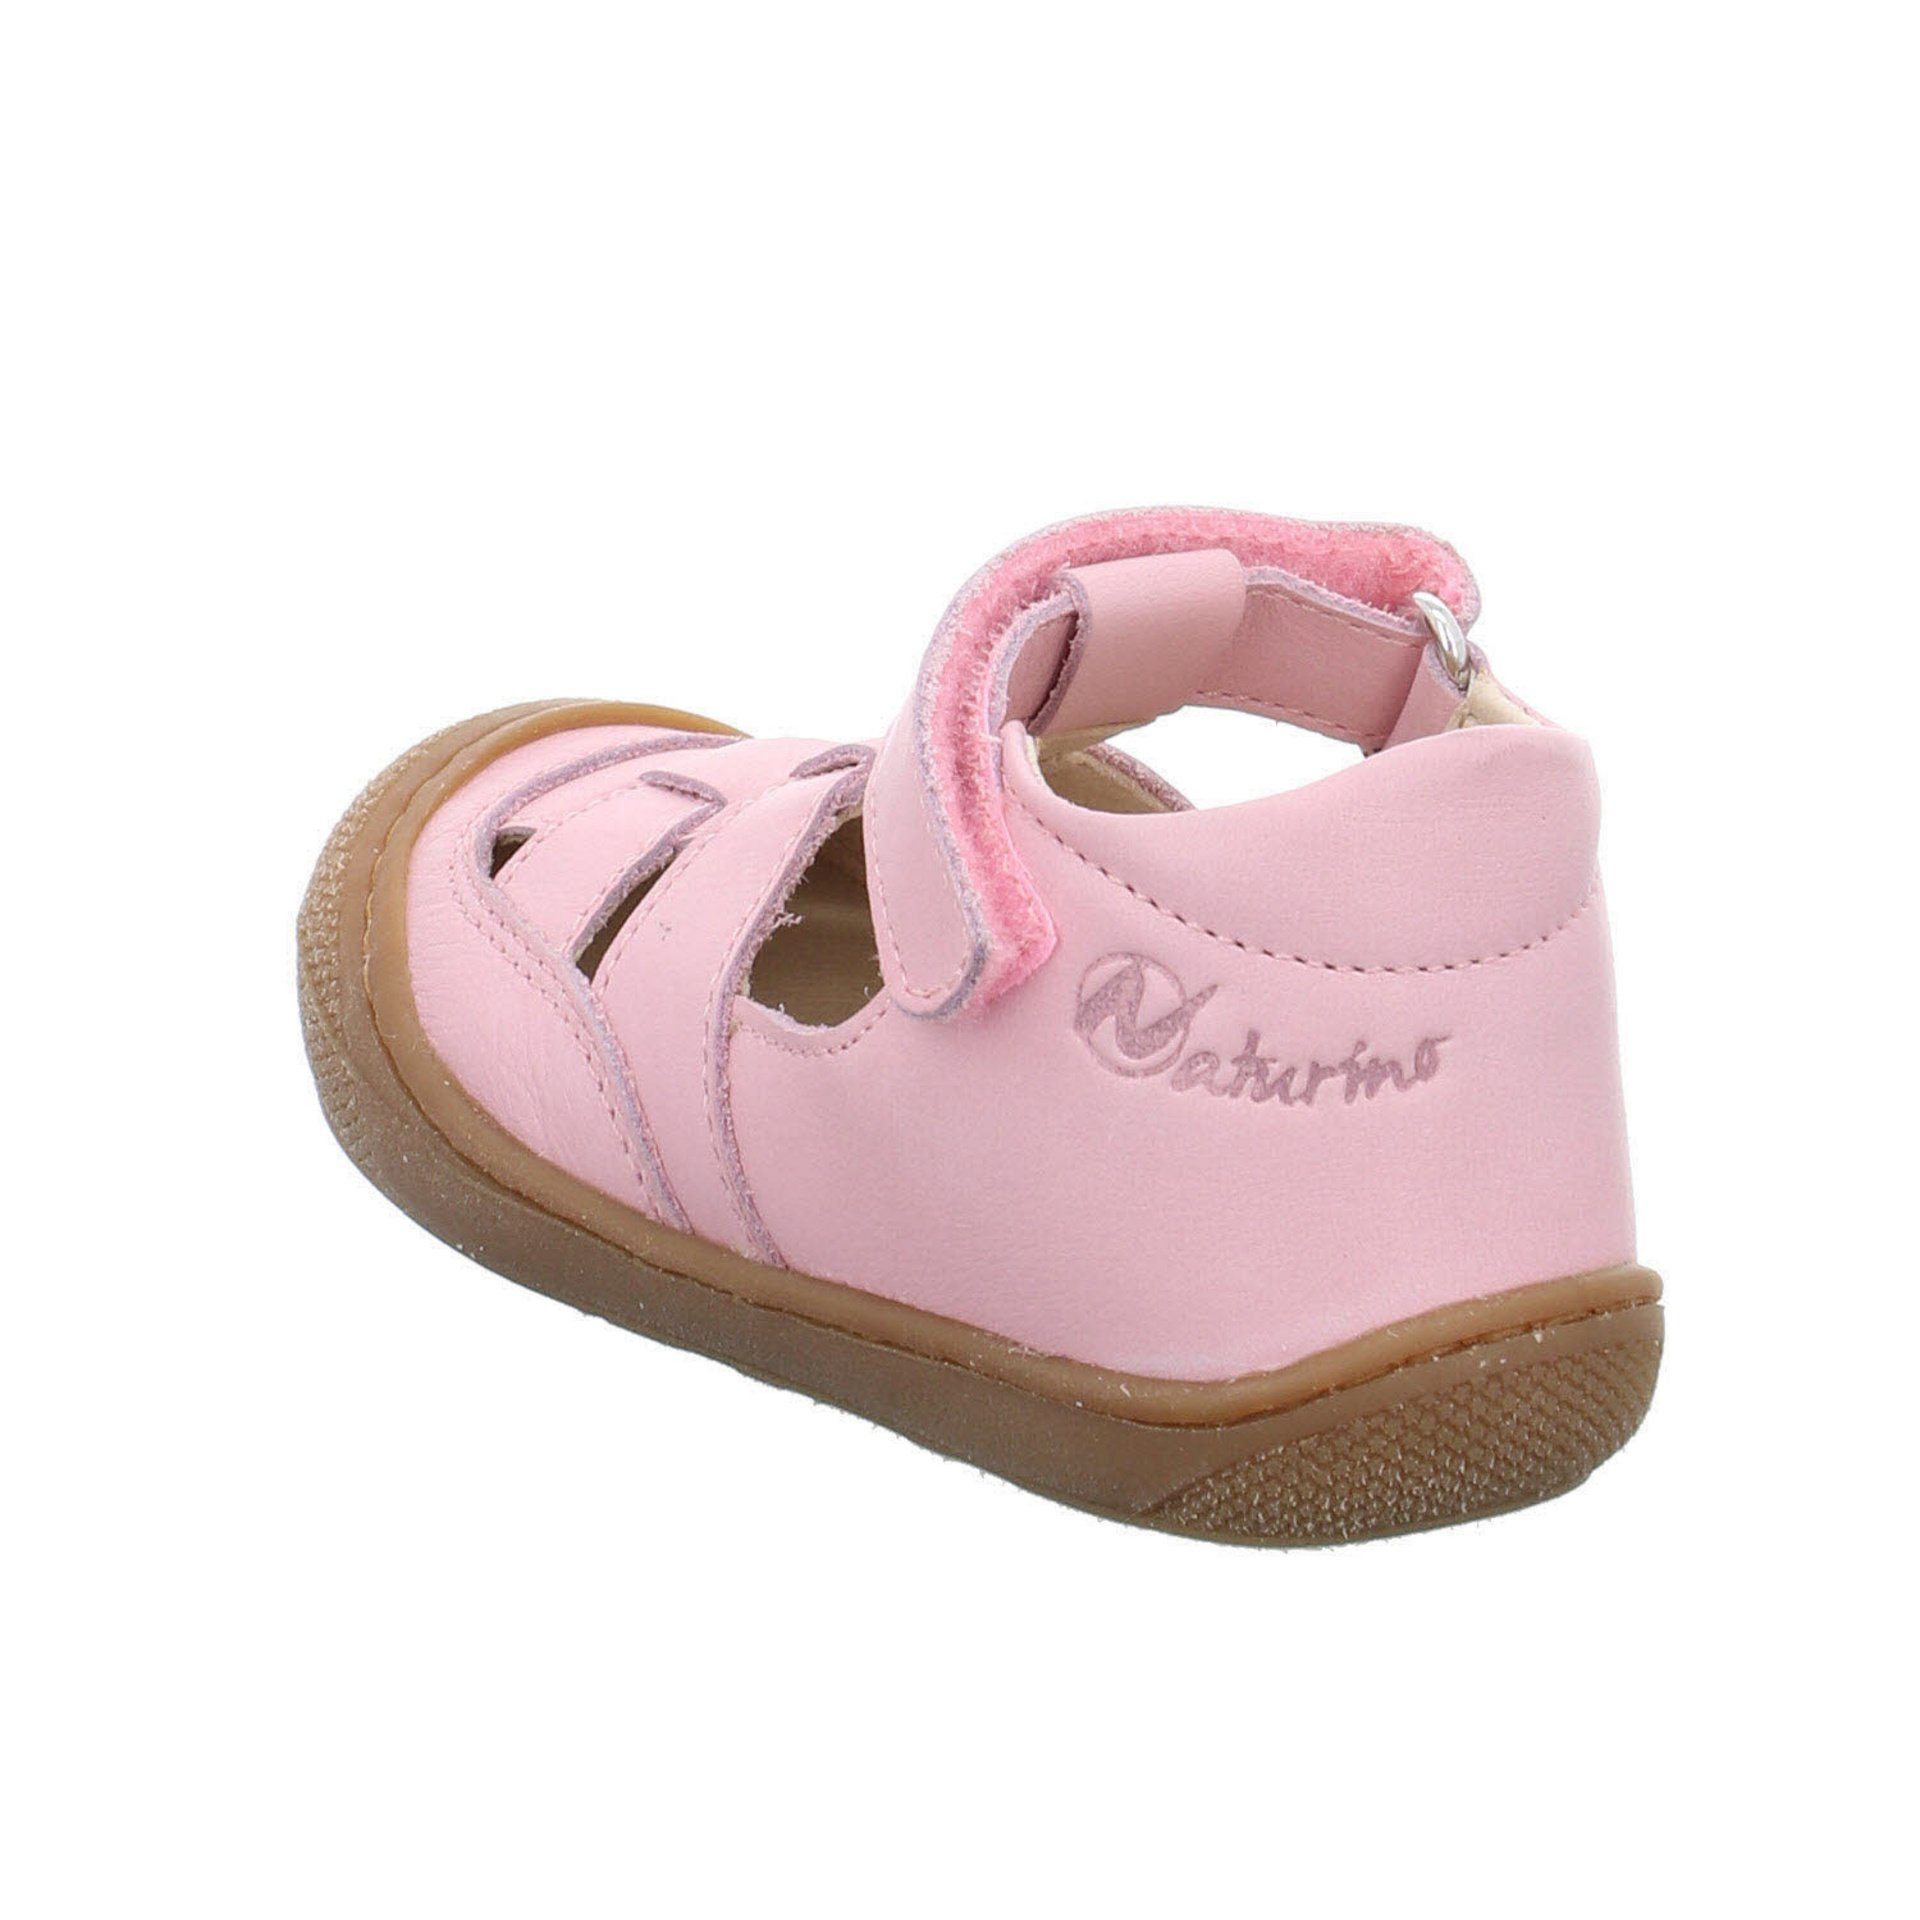 Naturino Sandale Kinderschuhe lila Glattleder Sandalen Minilette Schuhe hell + rot Wad Mädchen